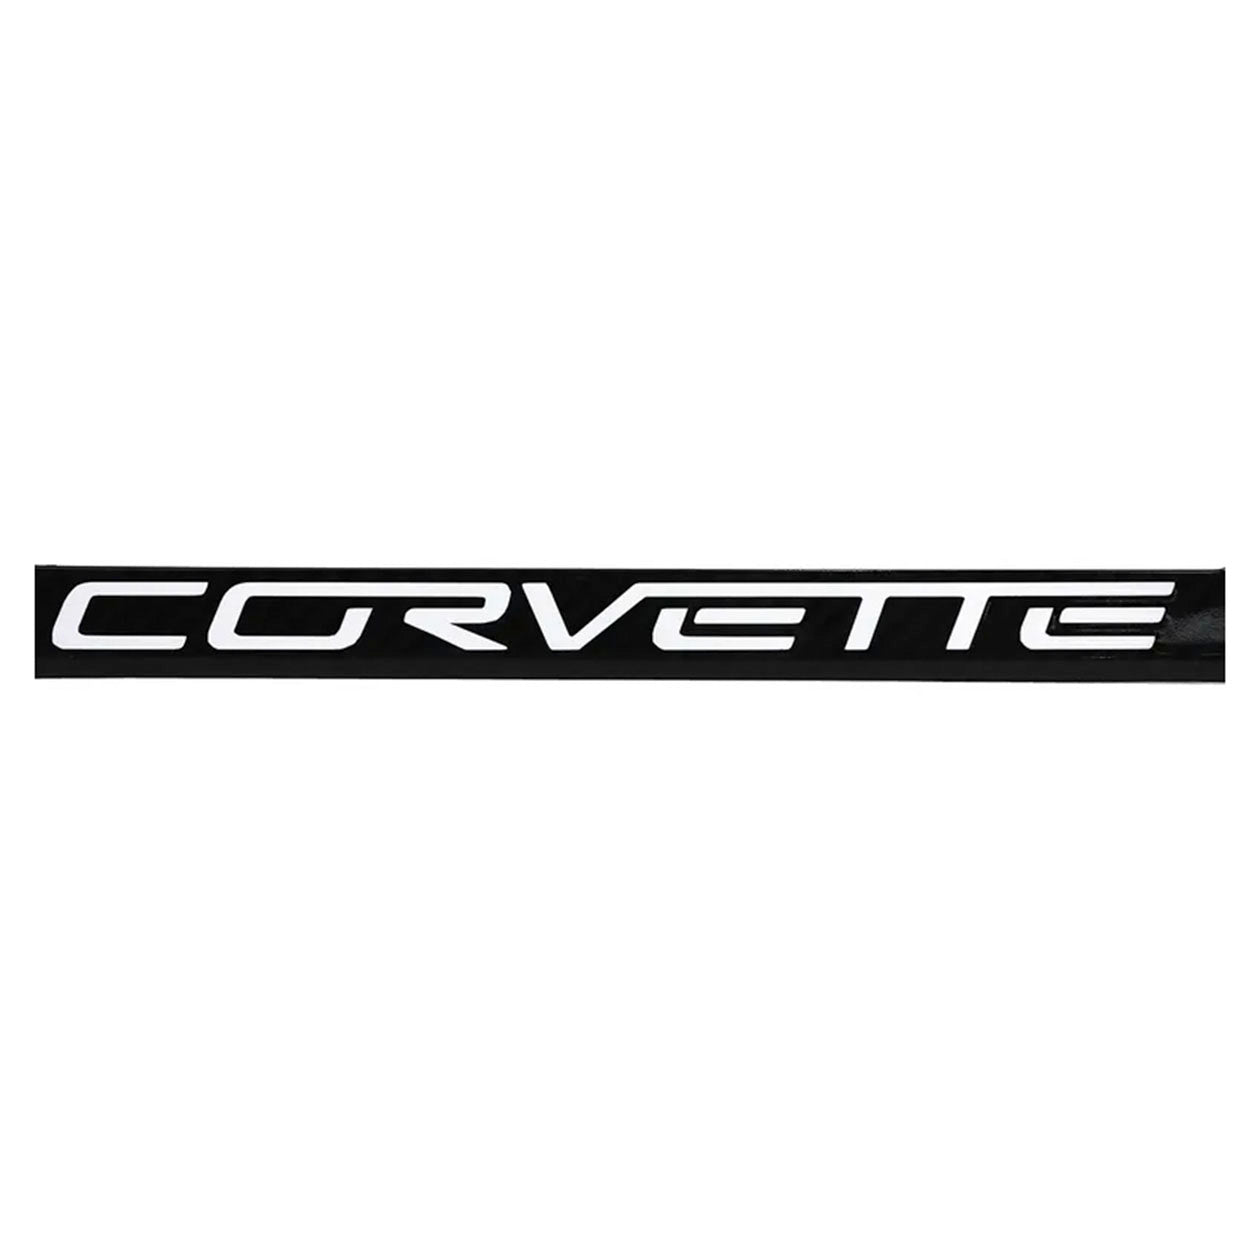 C6 Corvette License Plate Frame - Carbon Fiber Corvette Script